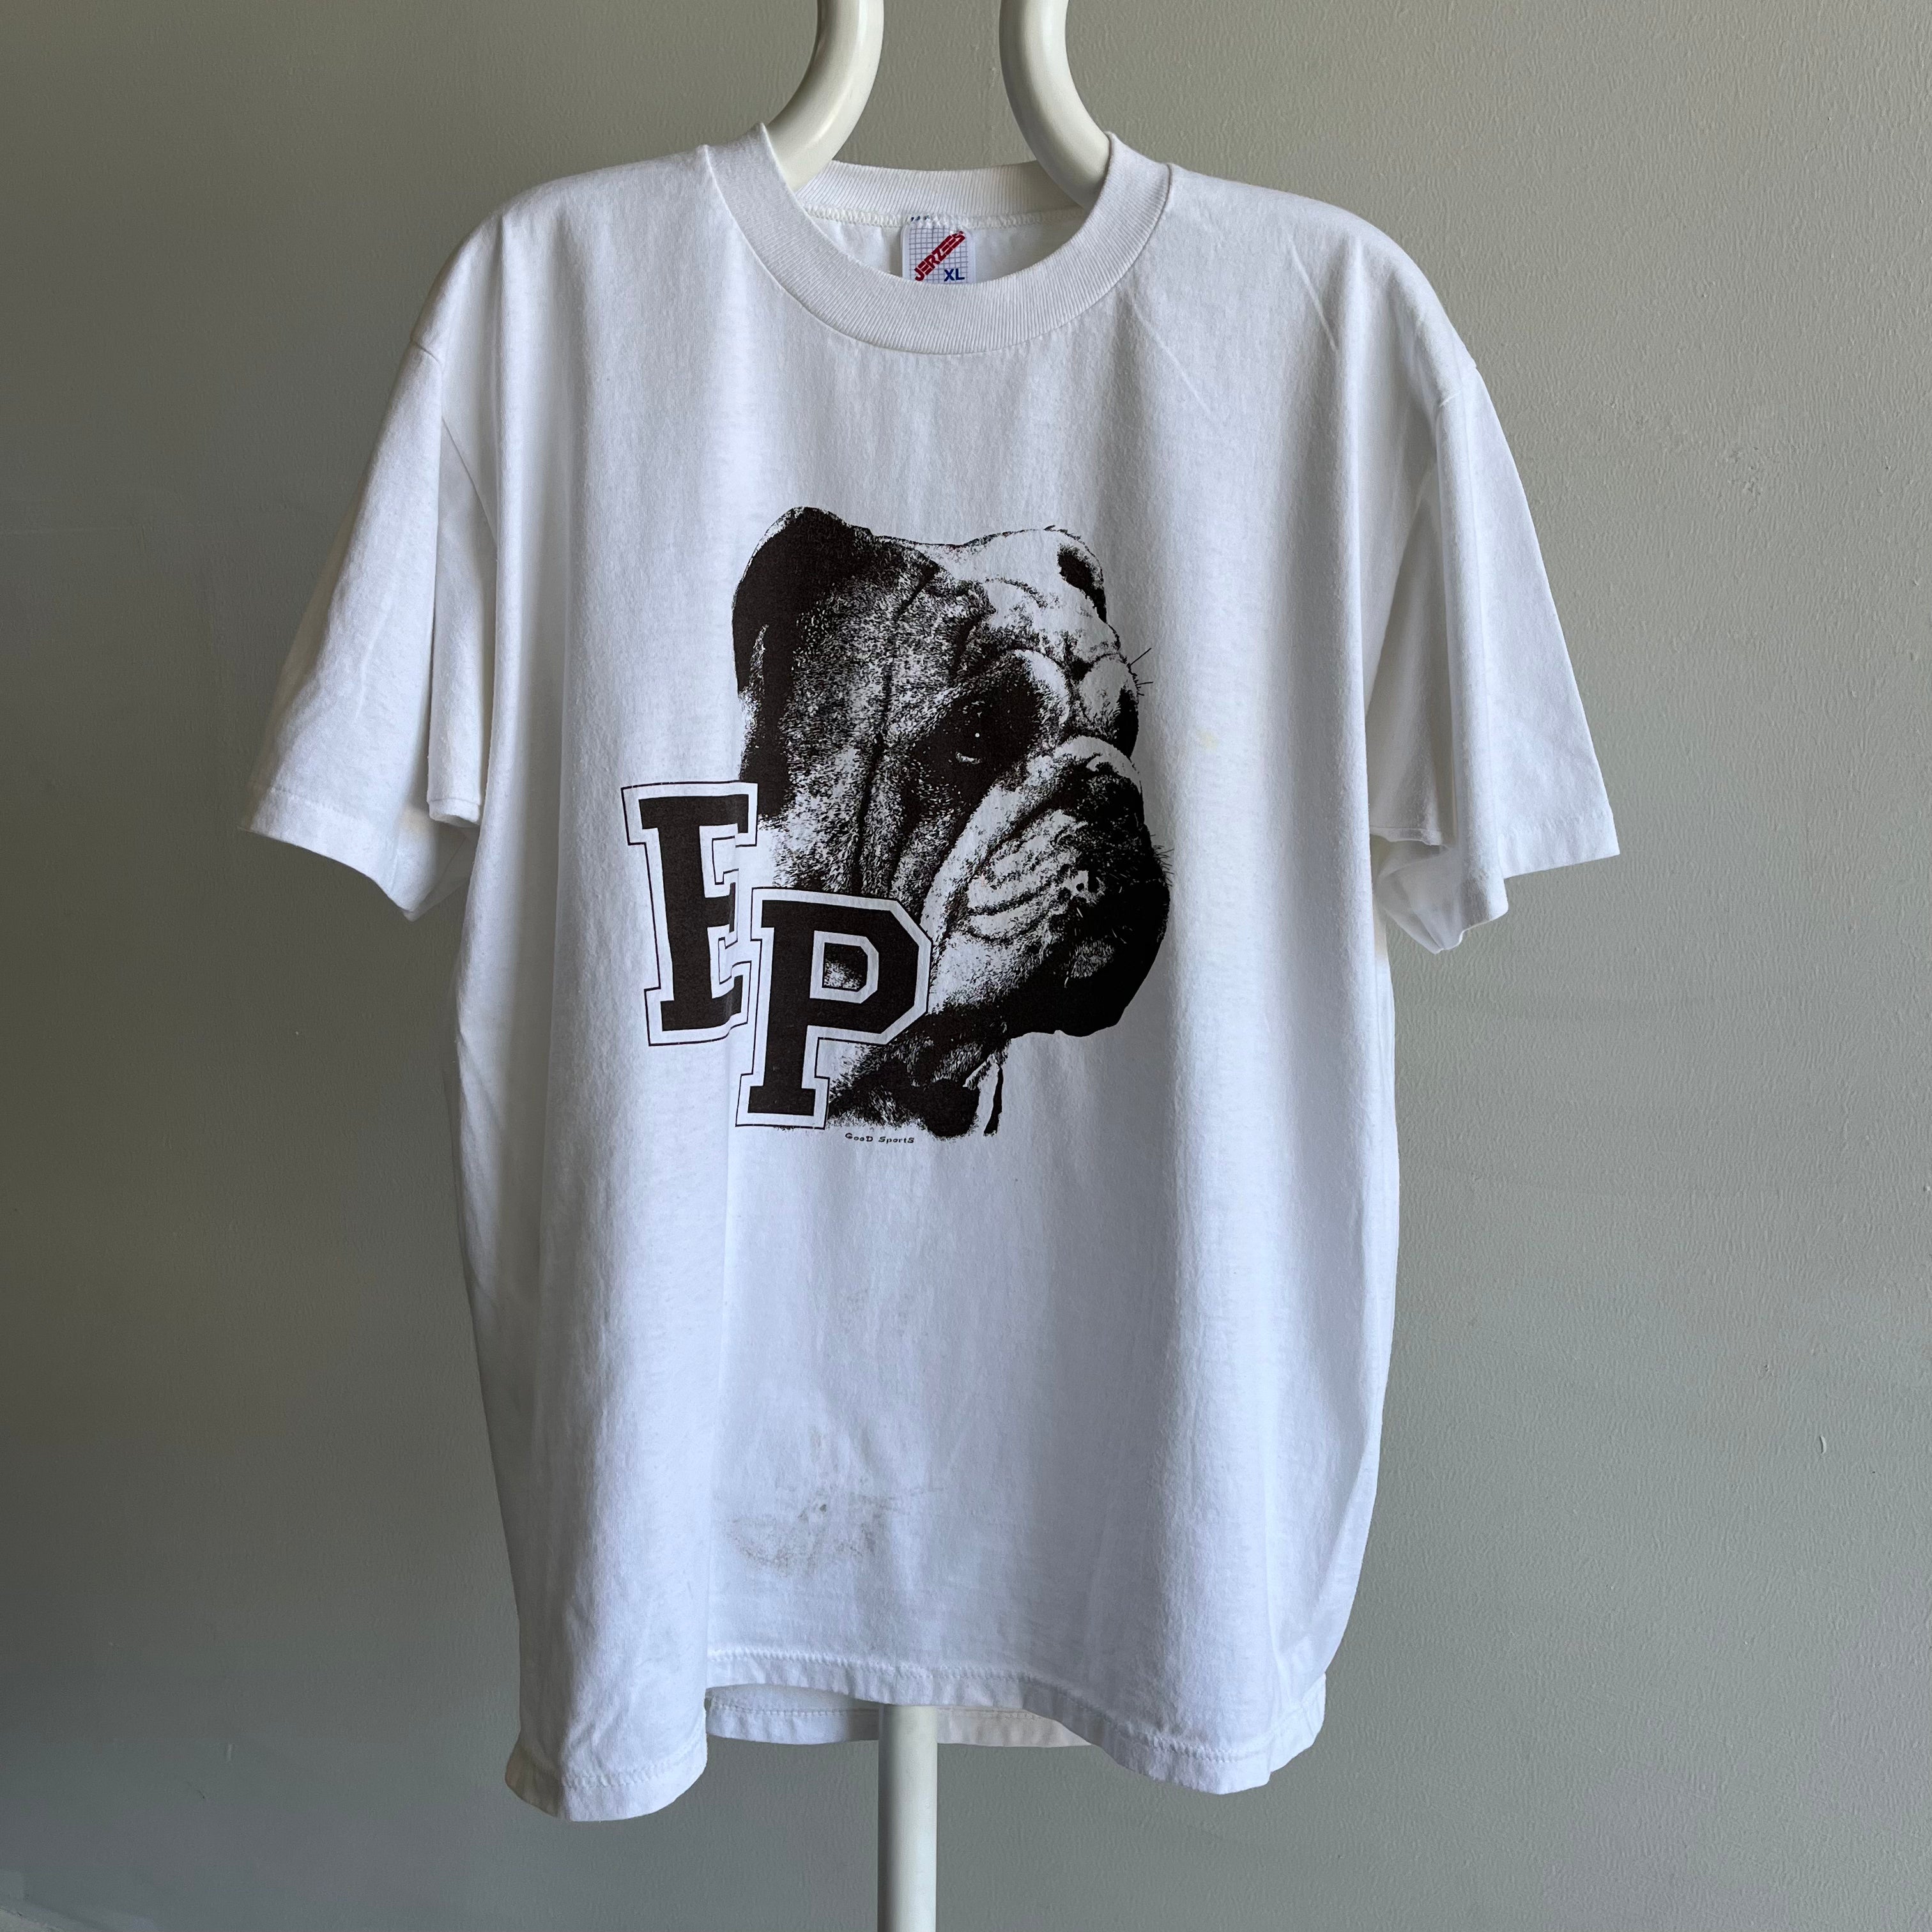 1980/90s EP Bulldogs T-Shirt